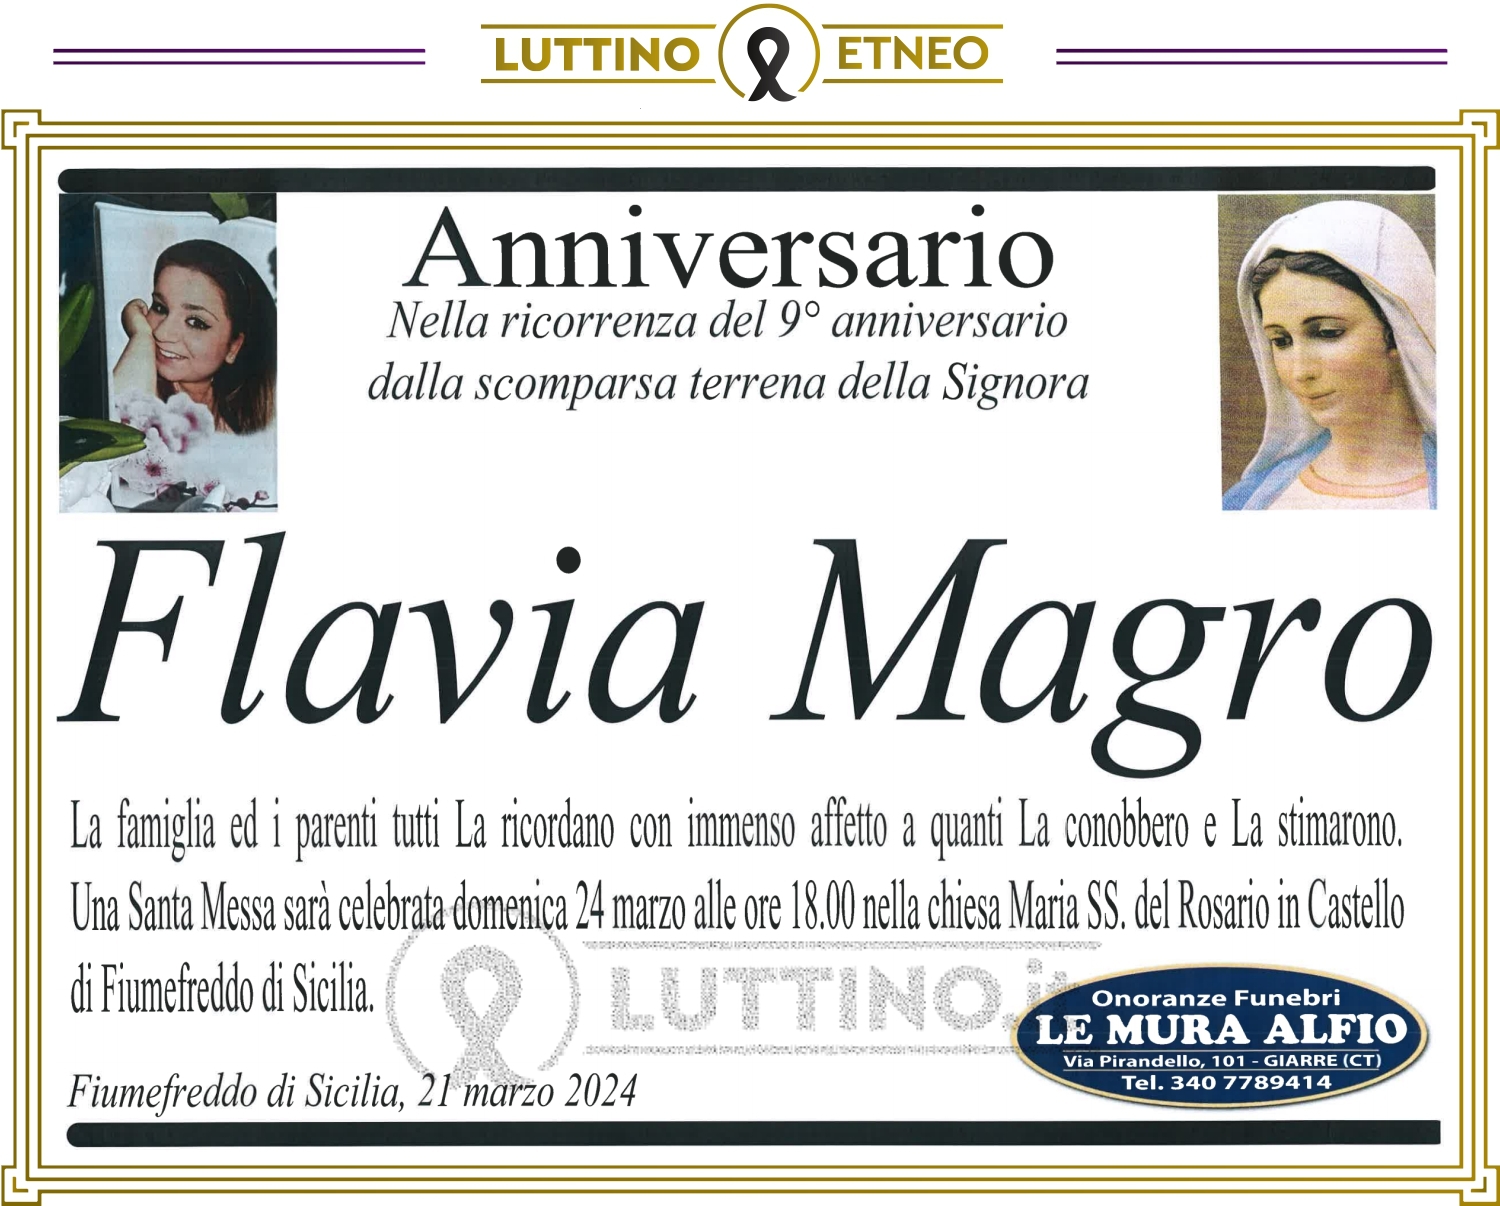 Flavia Magro